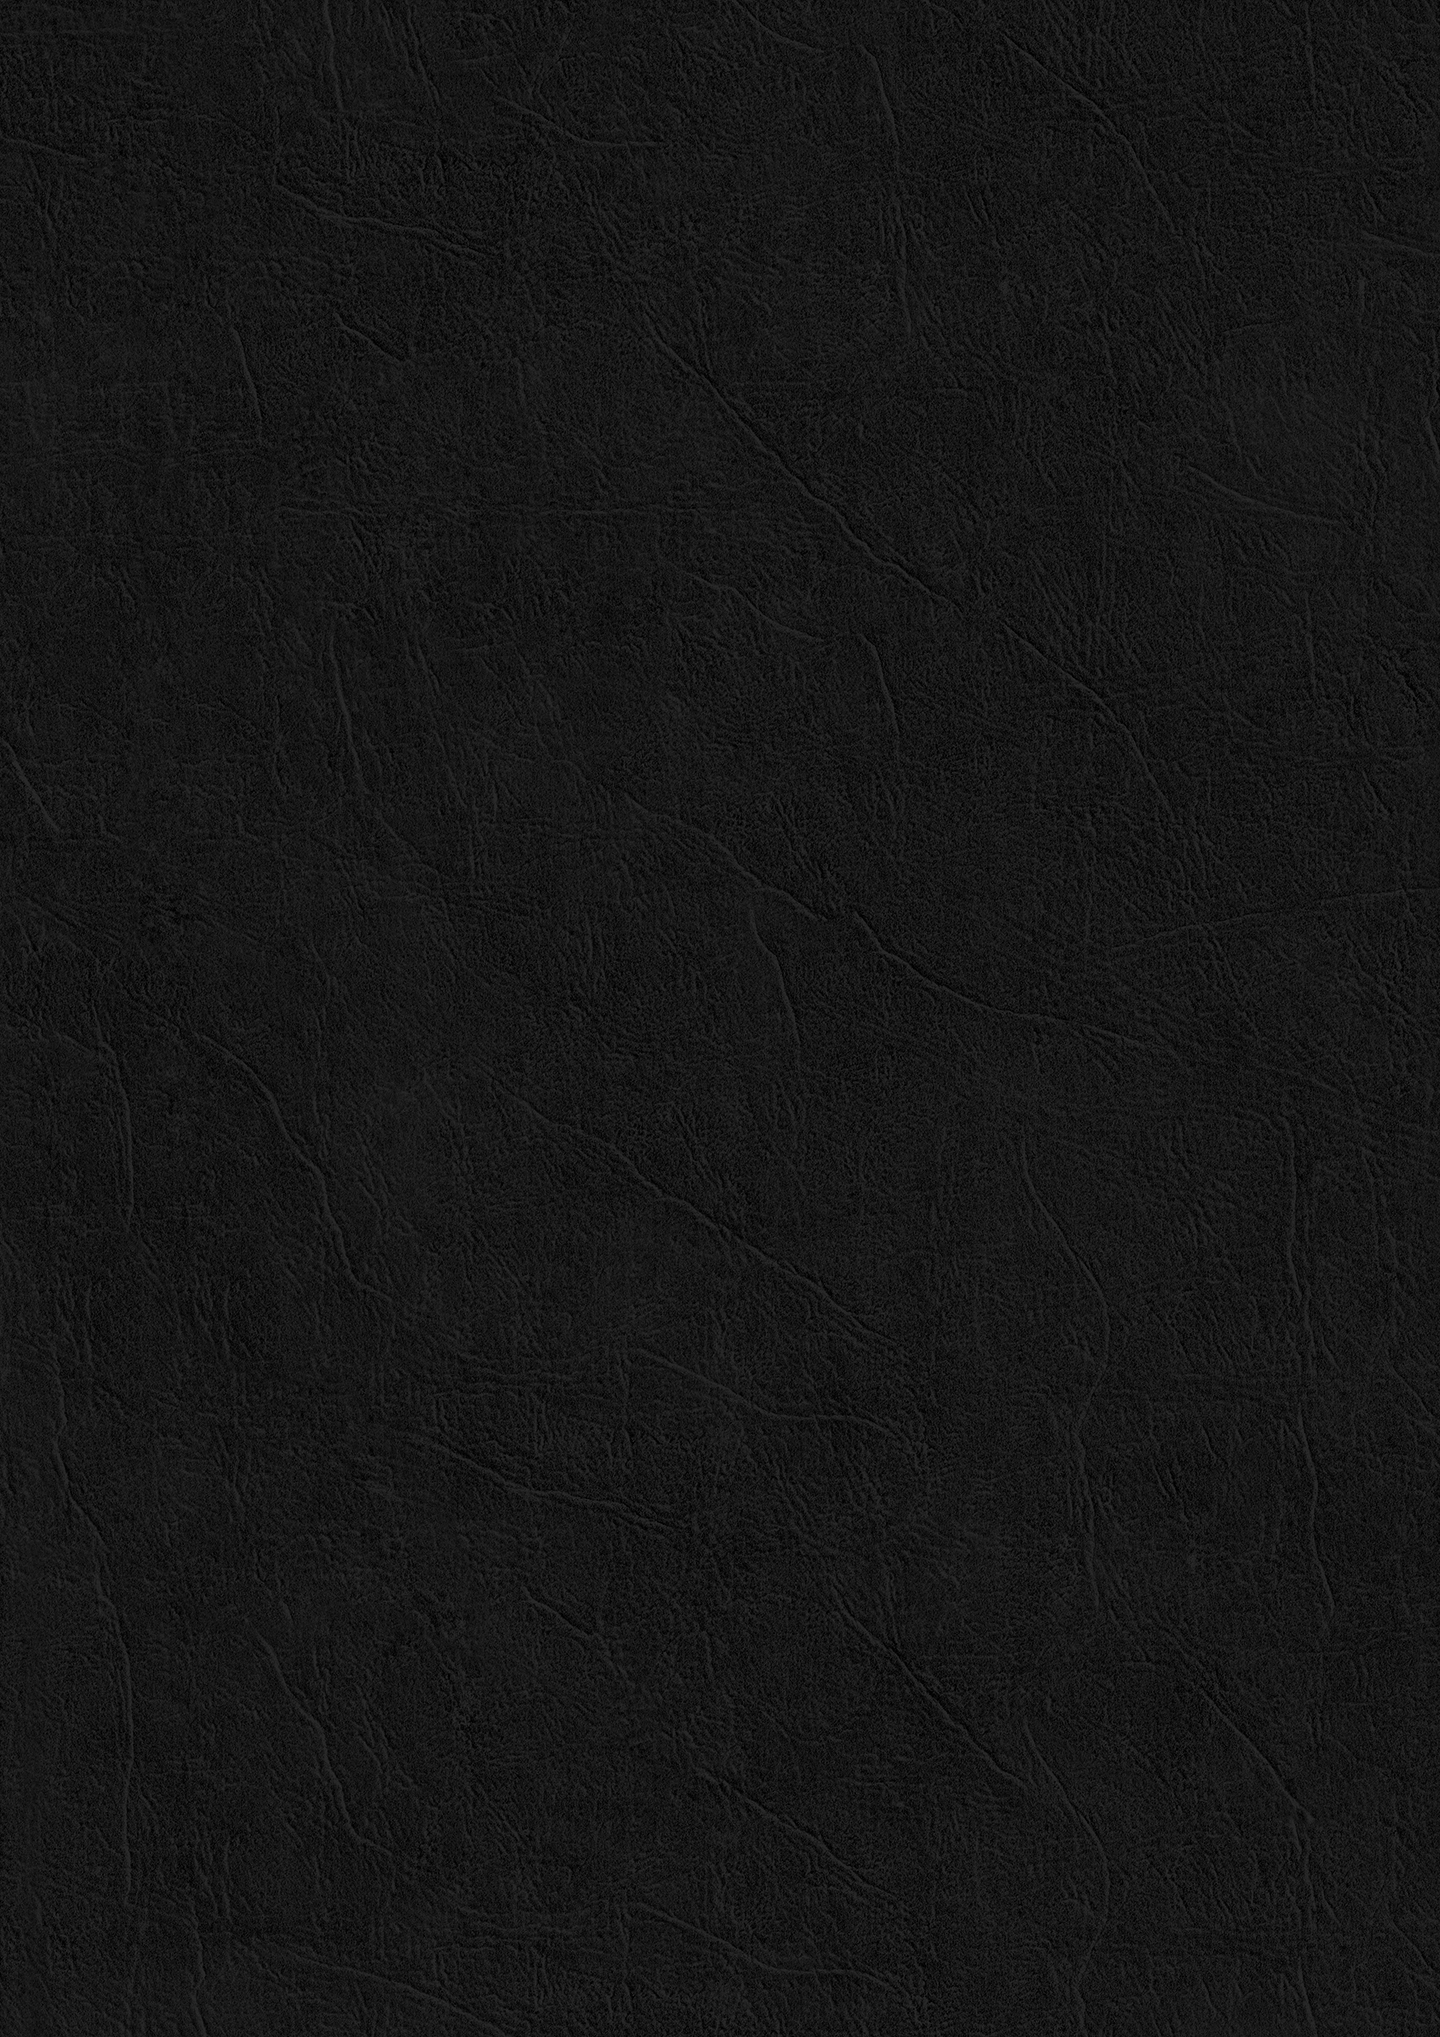 26 Black Paper Background Textures Textures.World